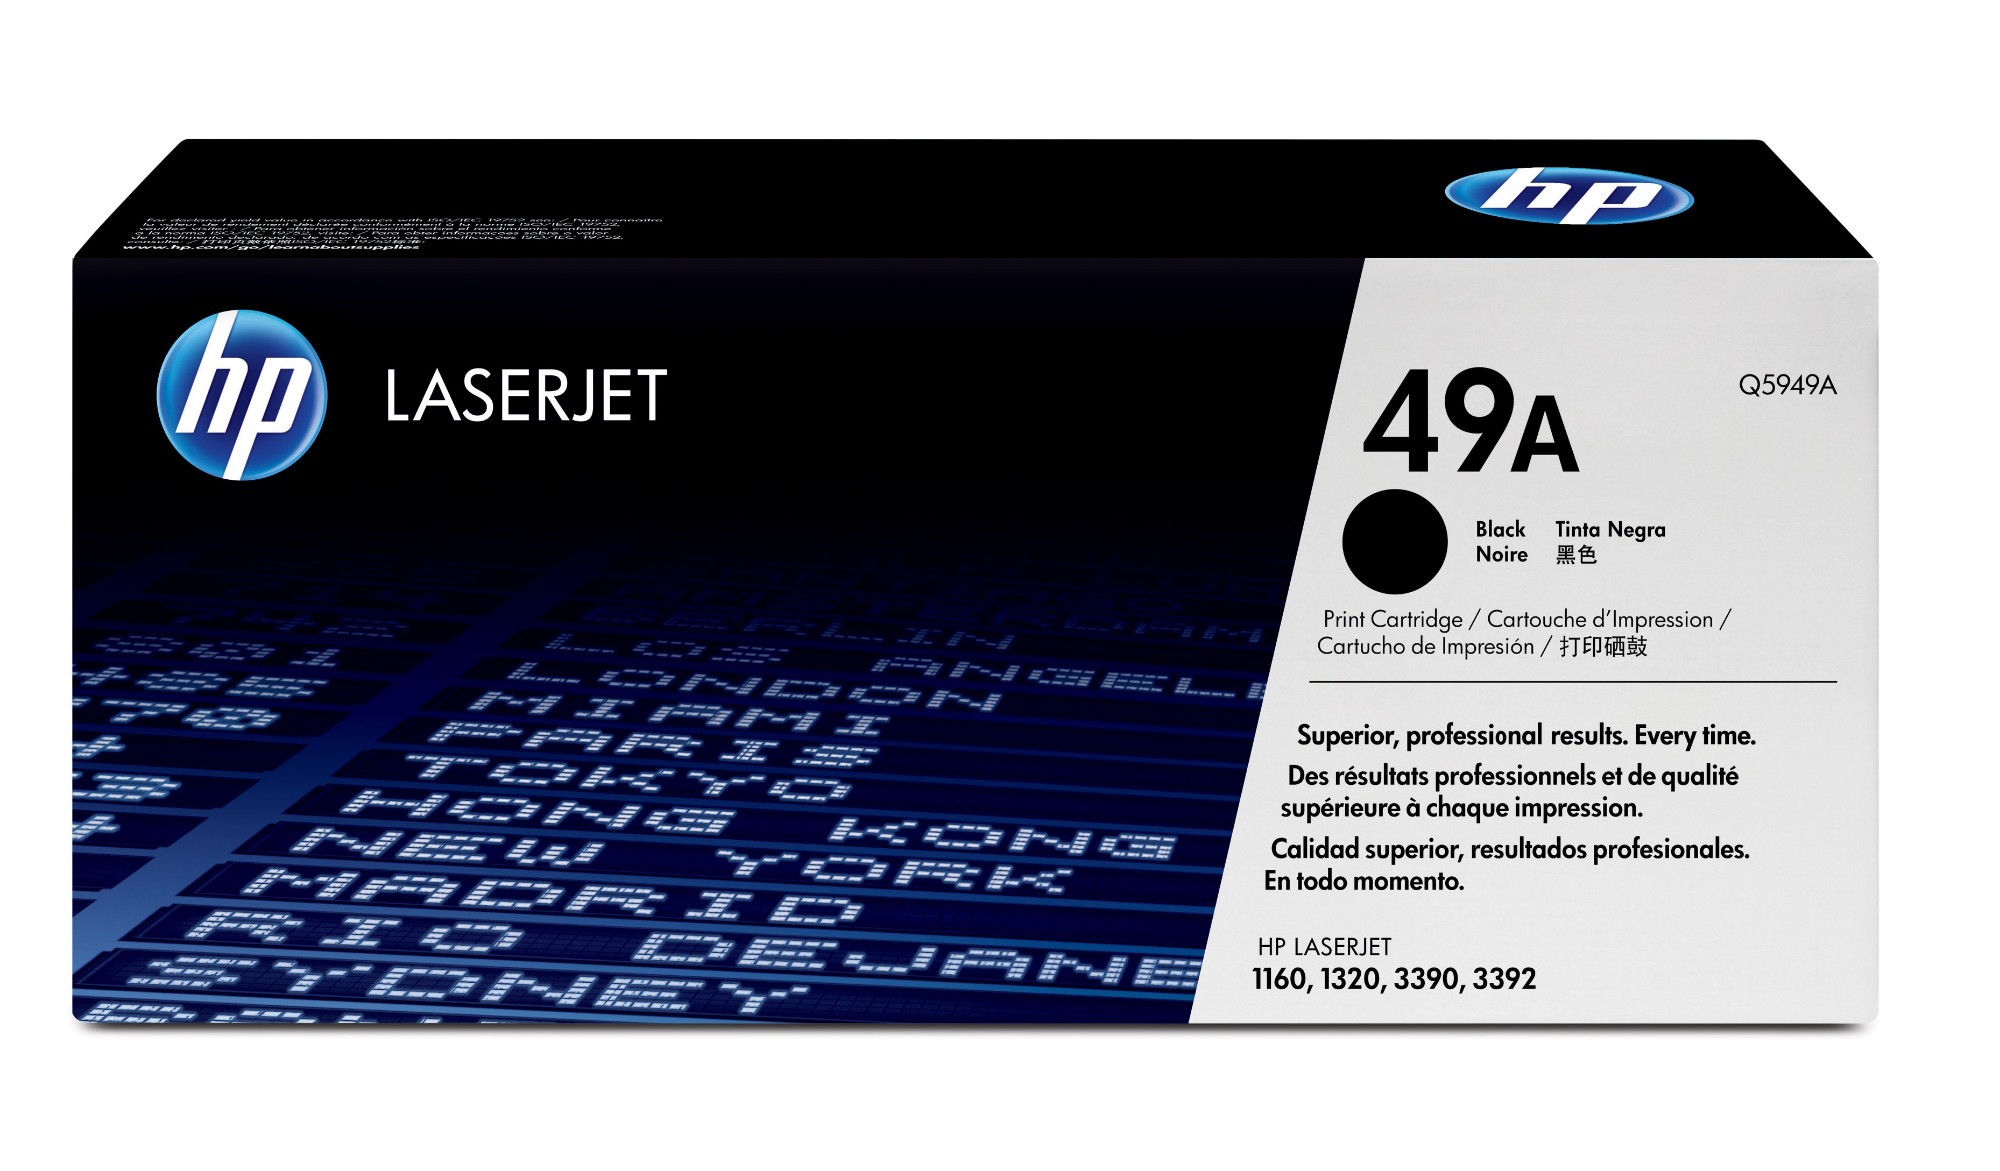 HP Q5949A/49A Toner cartridge black, 2.5K pages ISO/IEC 19752 for Canon LBP-3300/HP LaserJet 1120